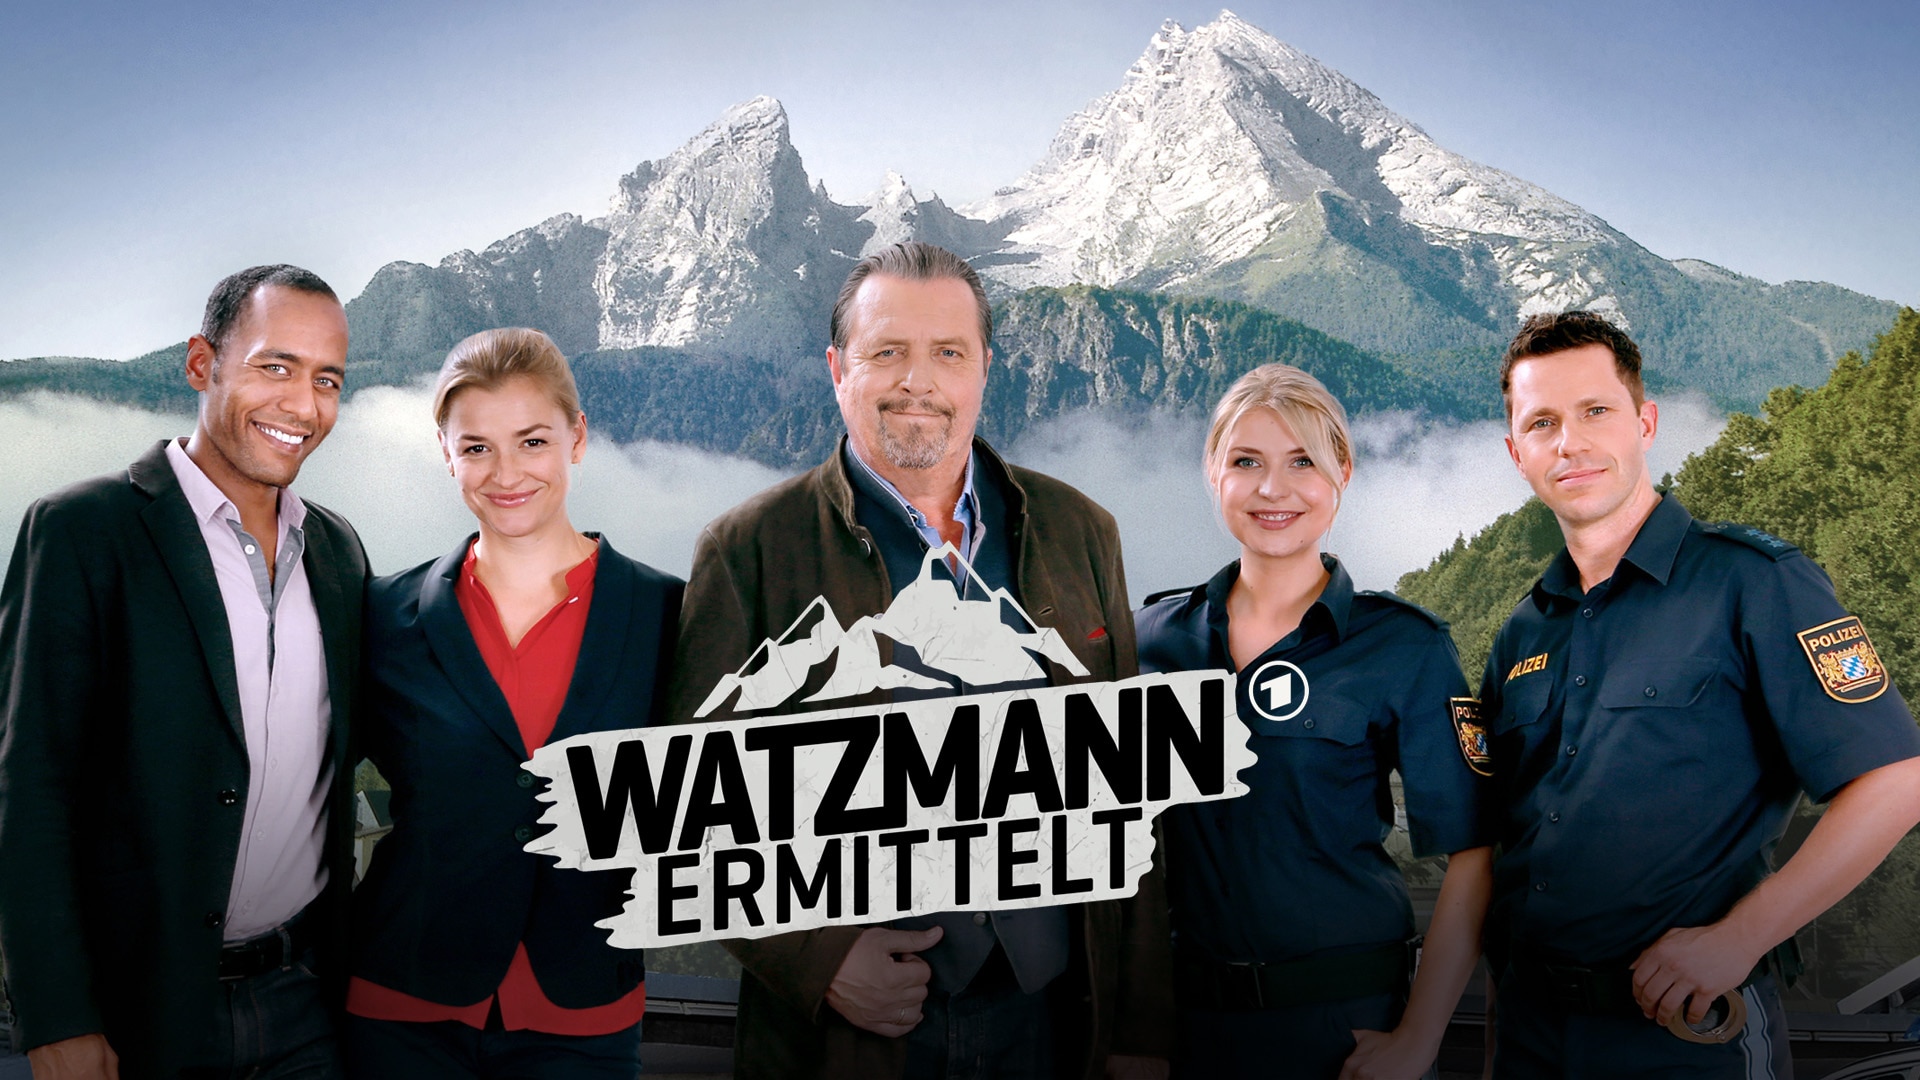 watzmann ermittelt tour